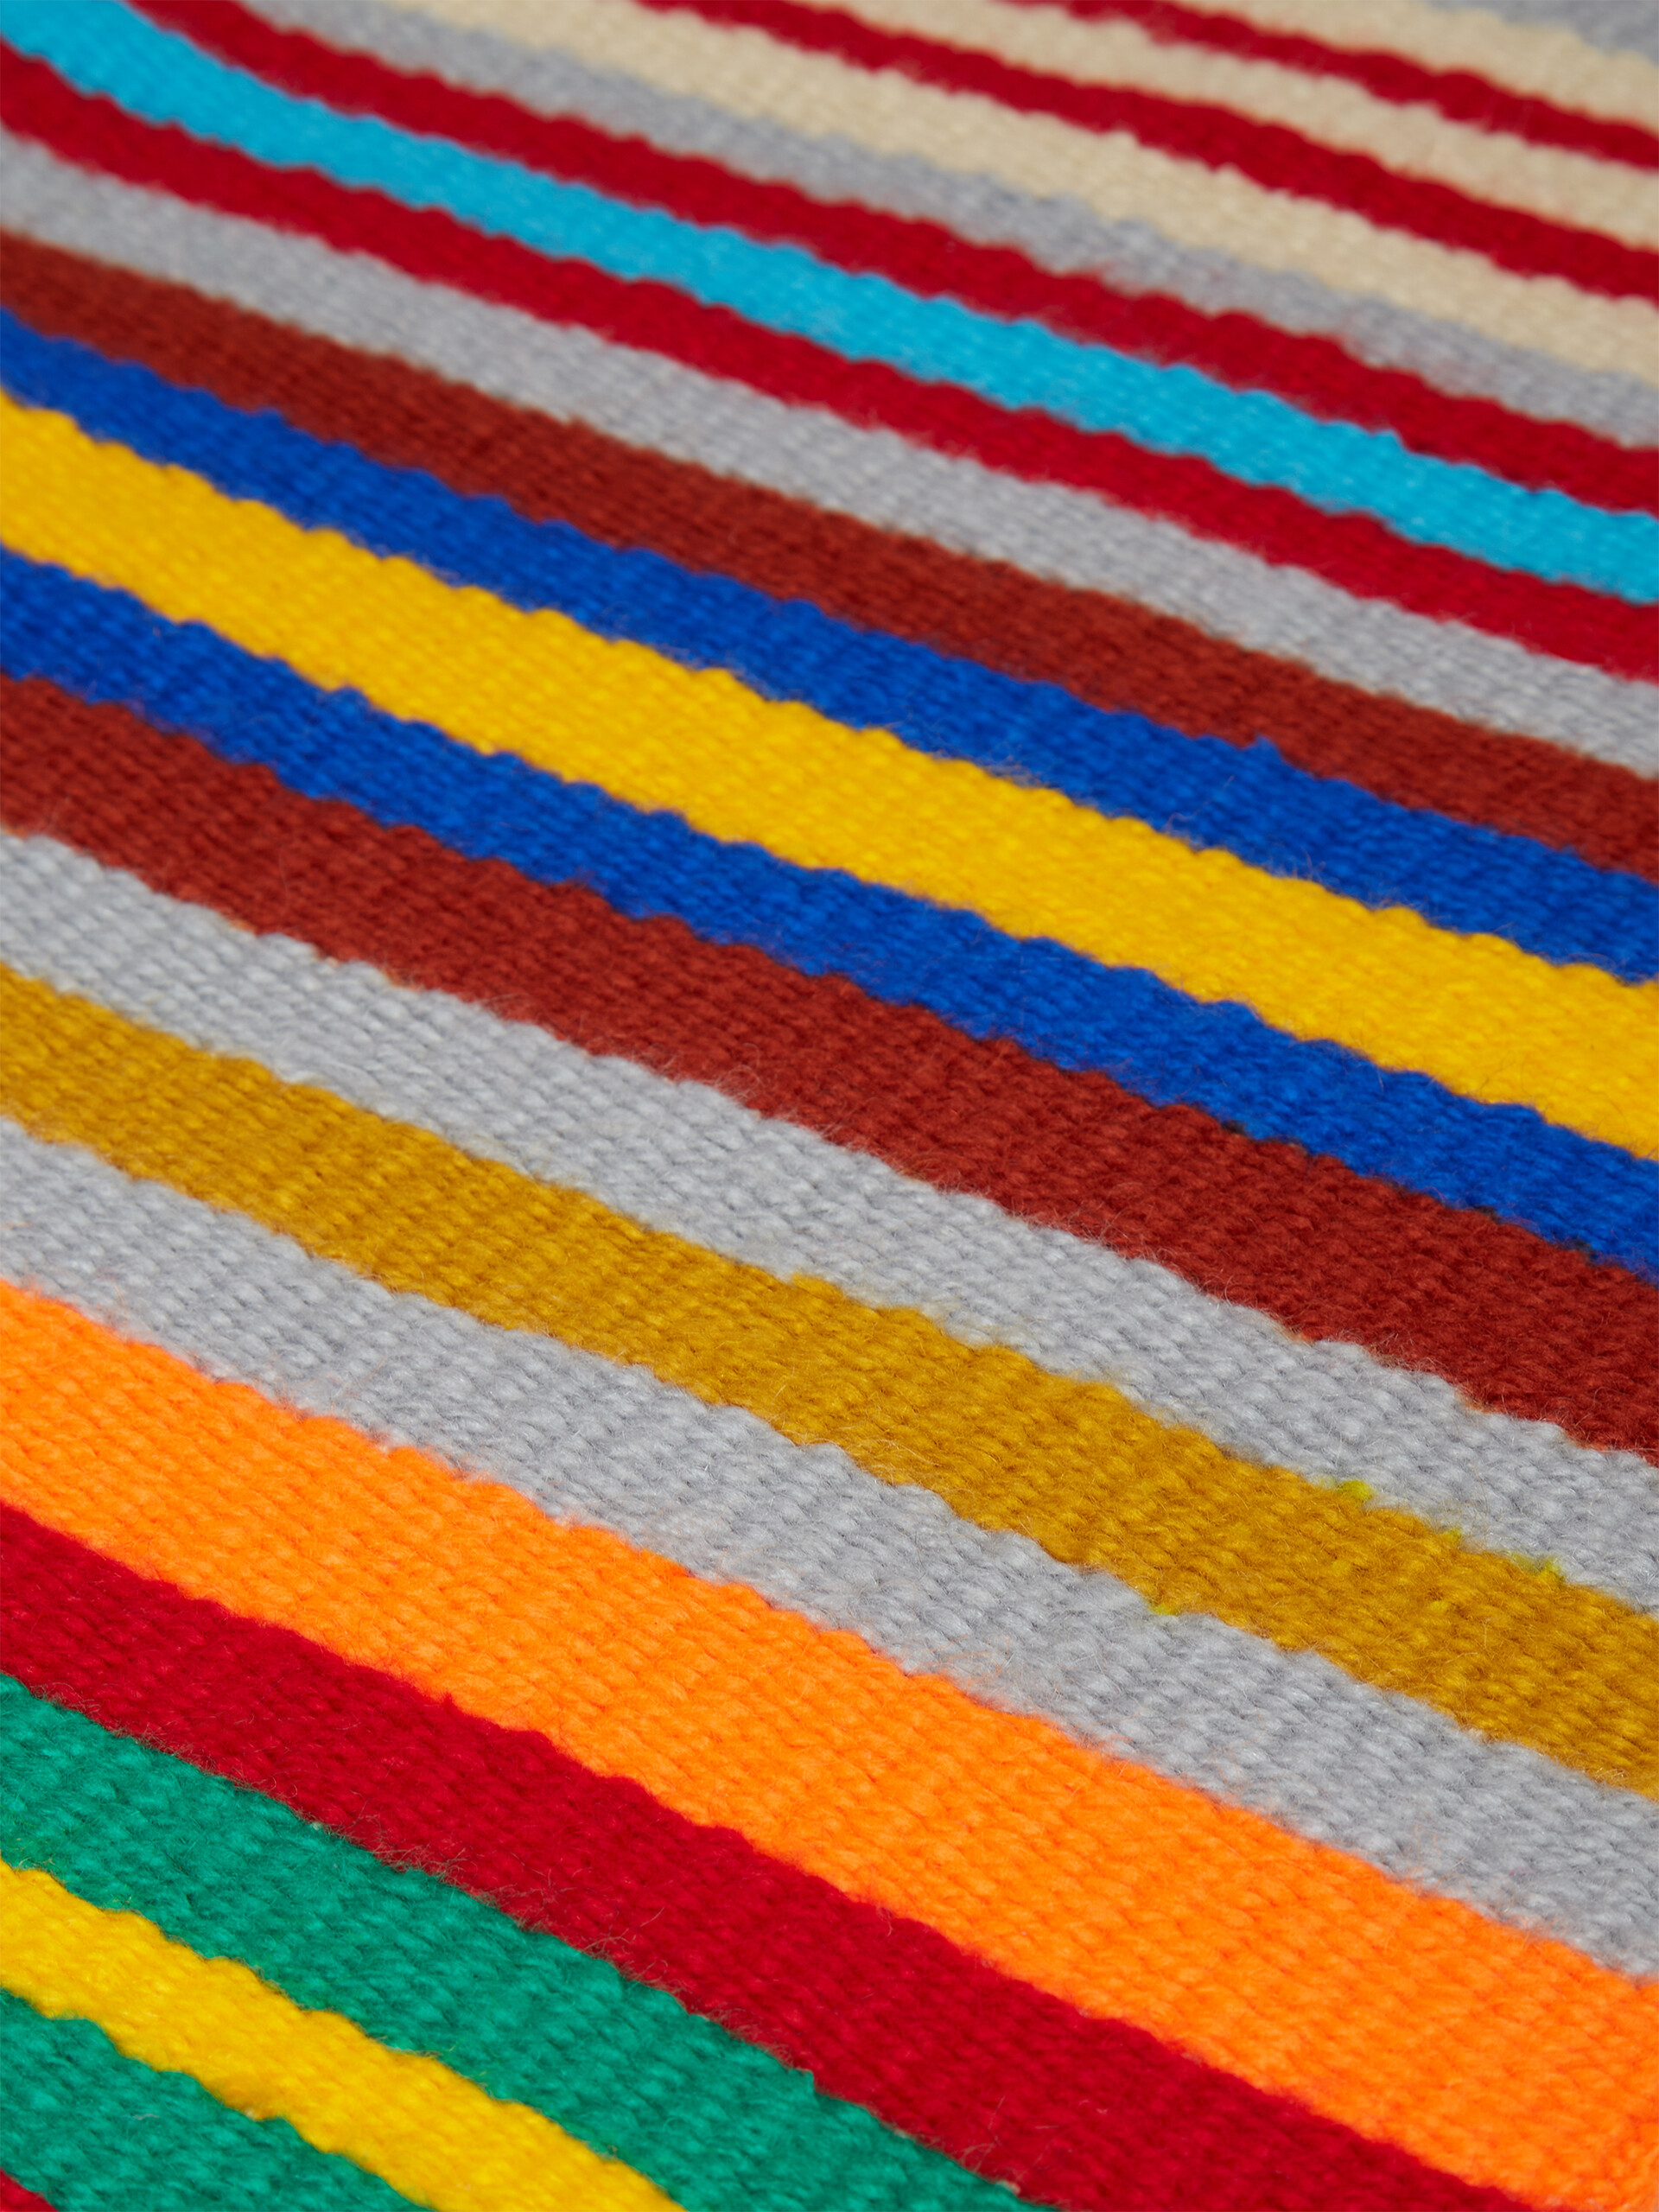 MARNI MARKET red crochet carpet - Furniture - Image 3